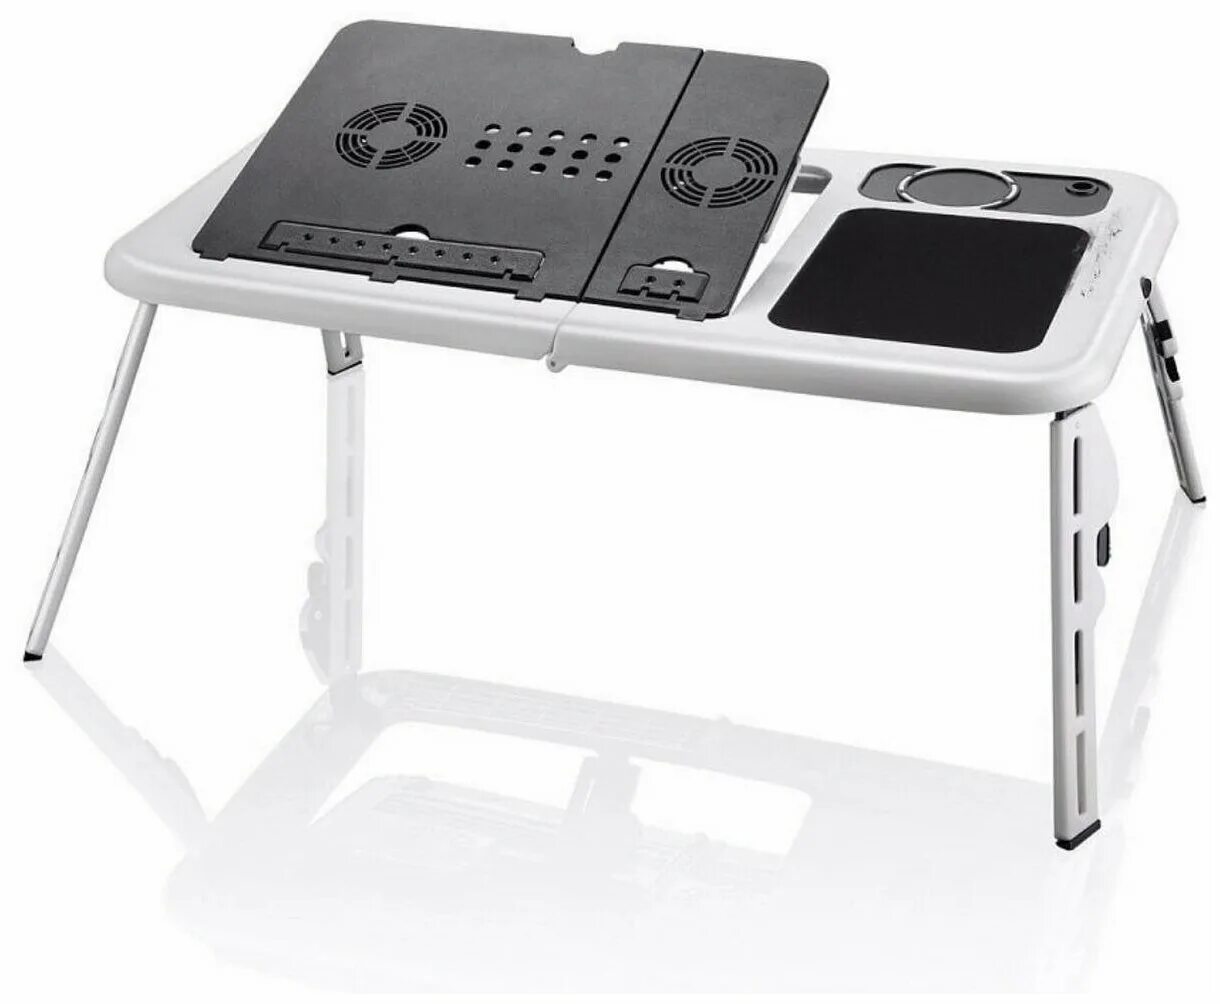 Портативный стол. Столик для ноутбука e-Table ld09. LEMLEO столик для ноутбука с охлаждением. Orient FTNB-01n. Портативный столик для ноутбука с охладителем e-Table.